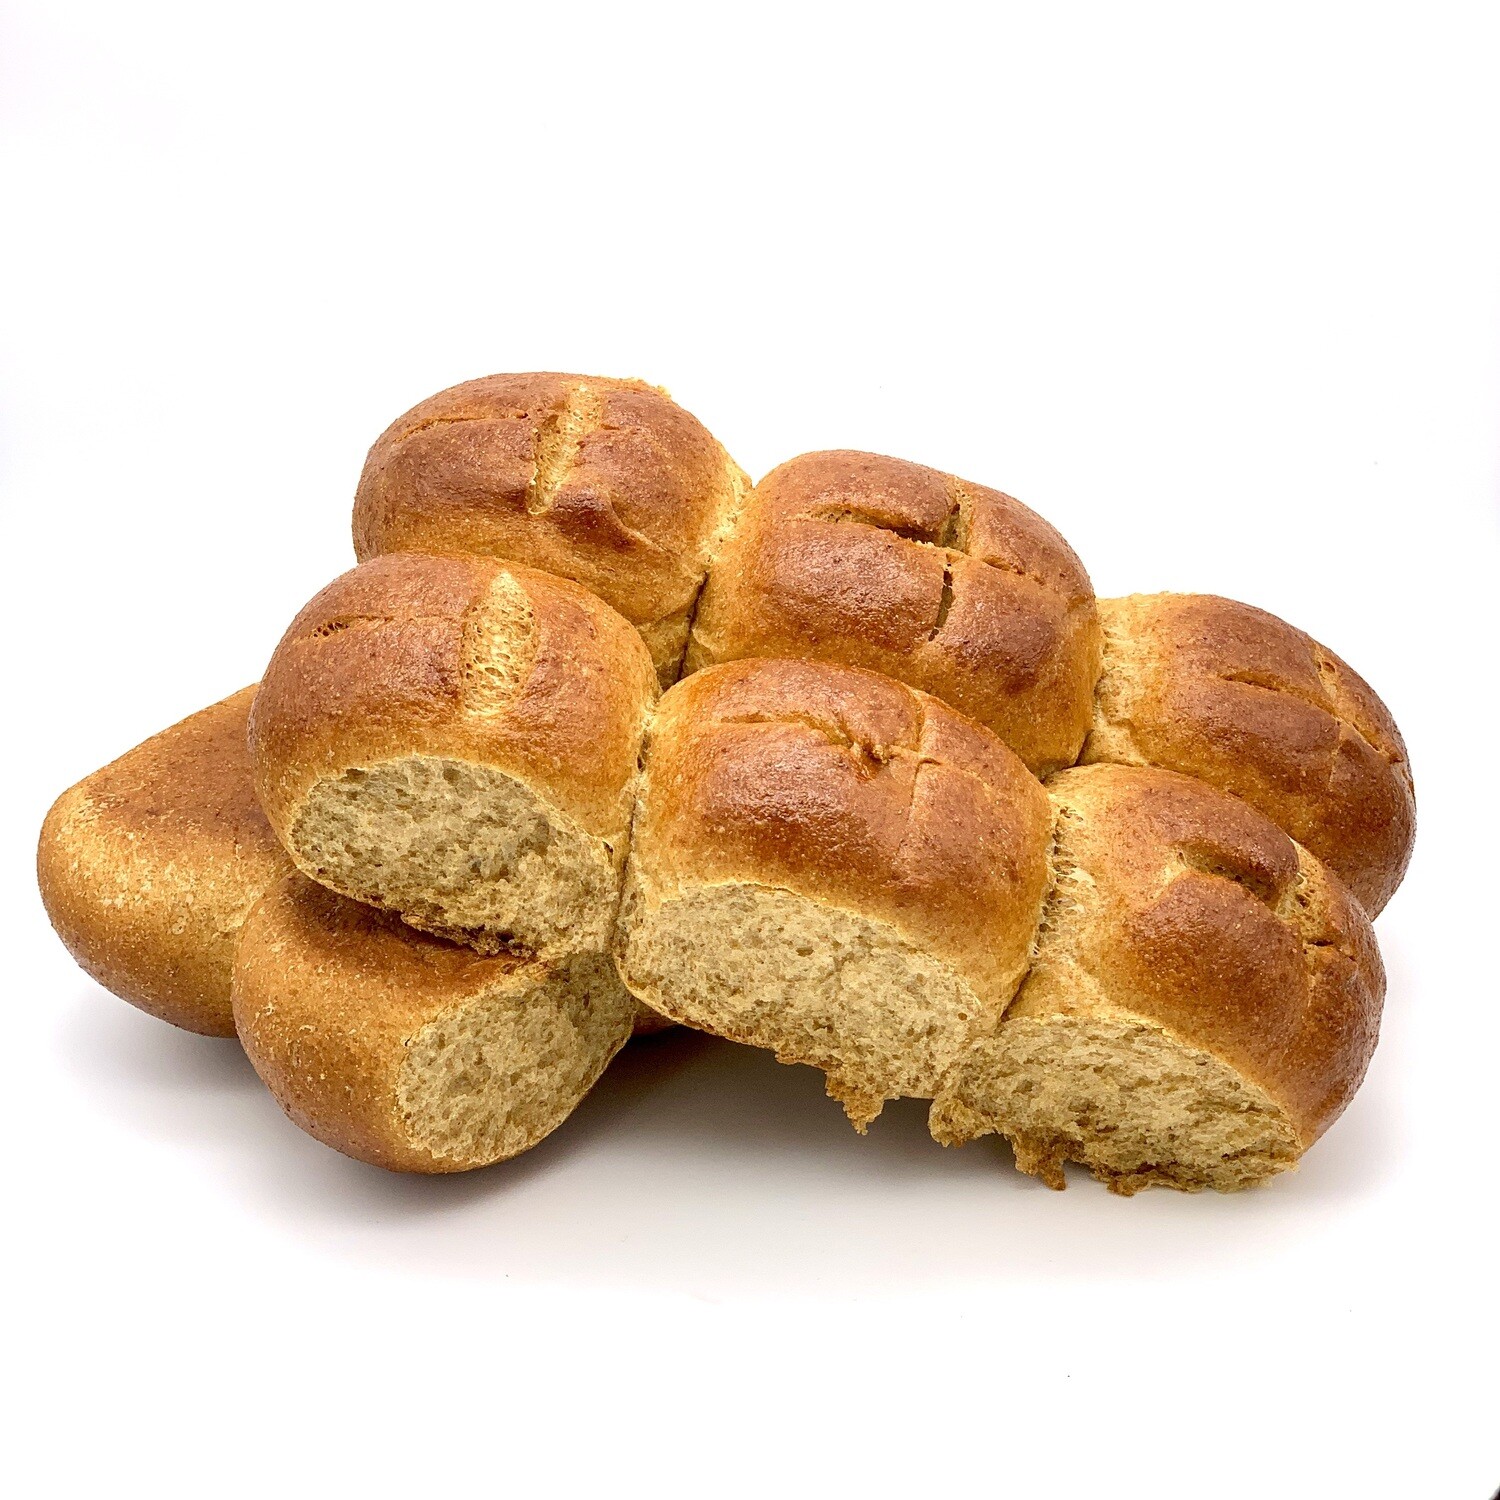 Anadama Bread Rolls